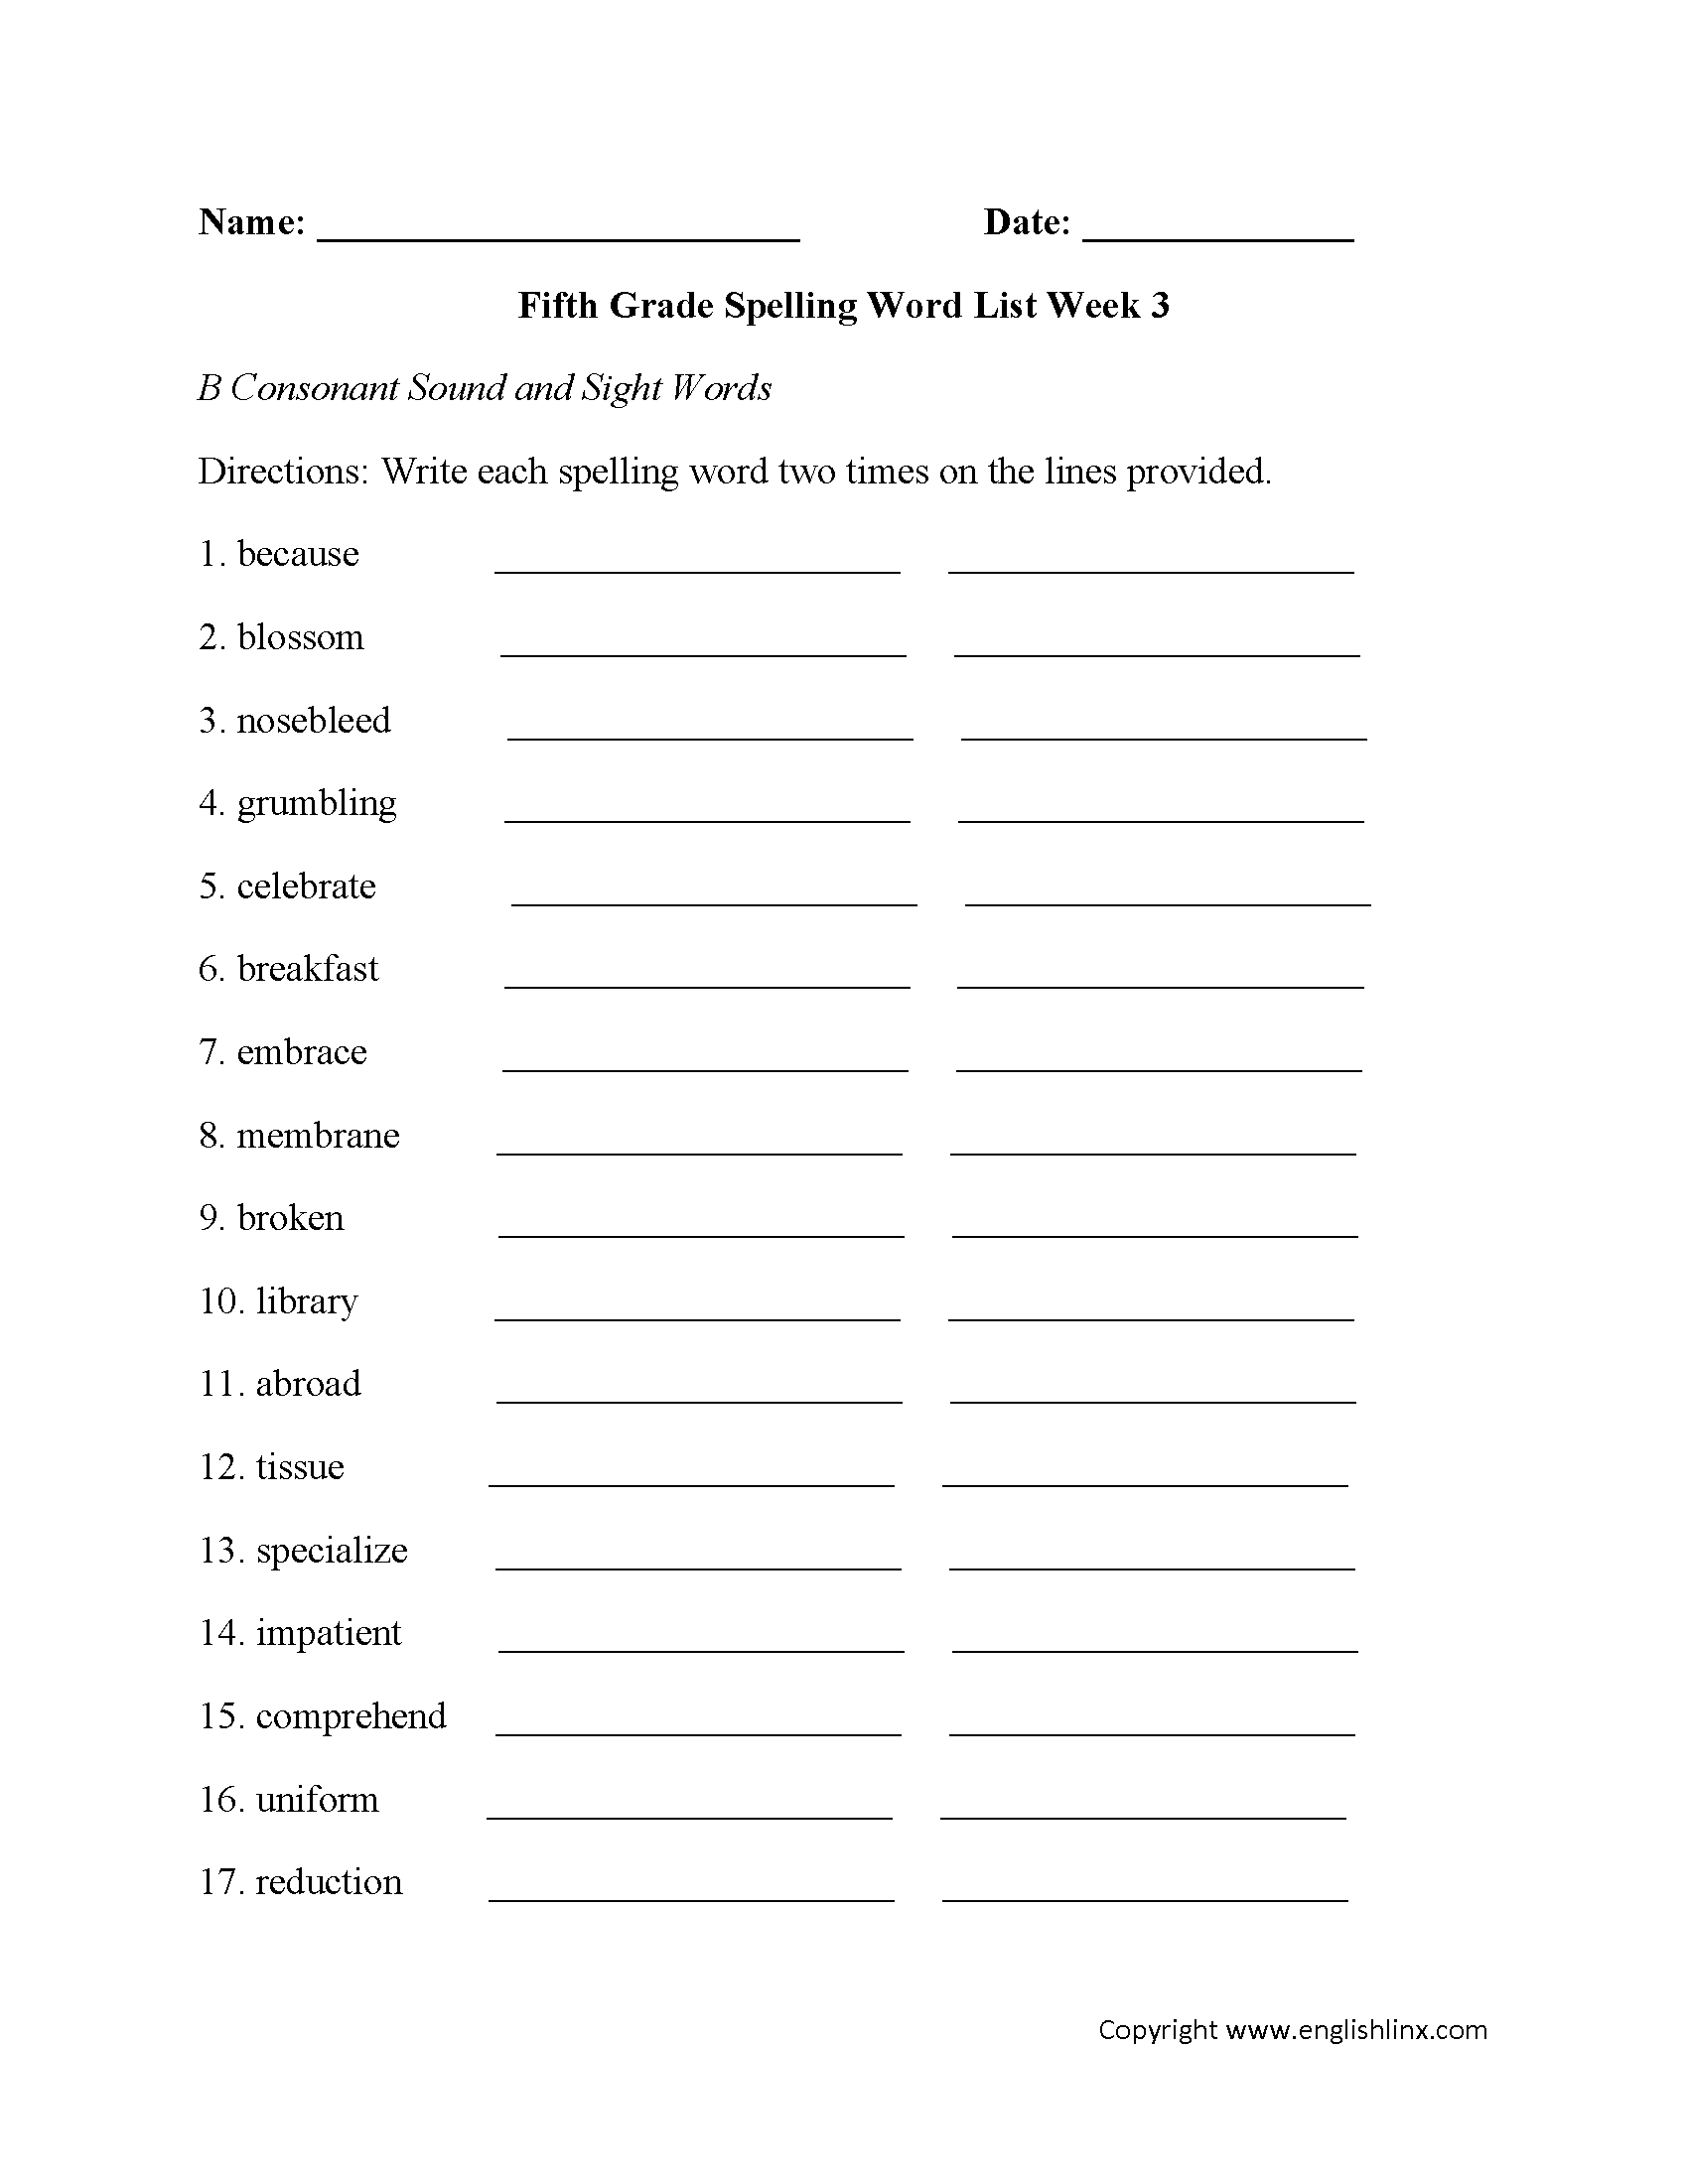 Spelling Worksheets | Fifth Grade Spelling Words Worksheets